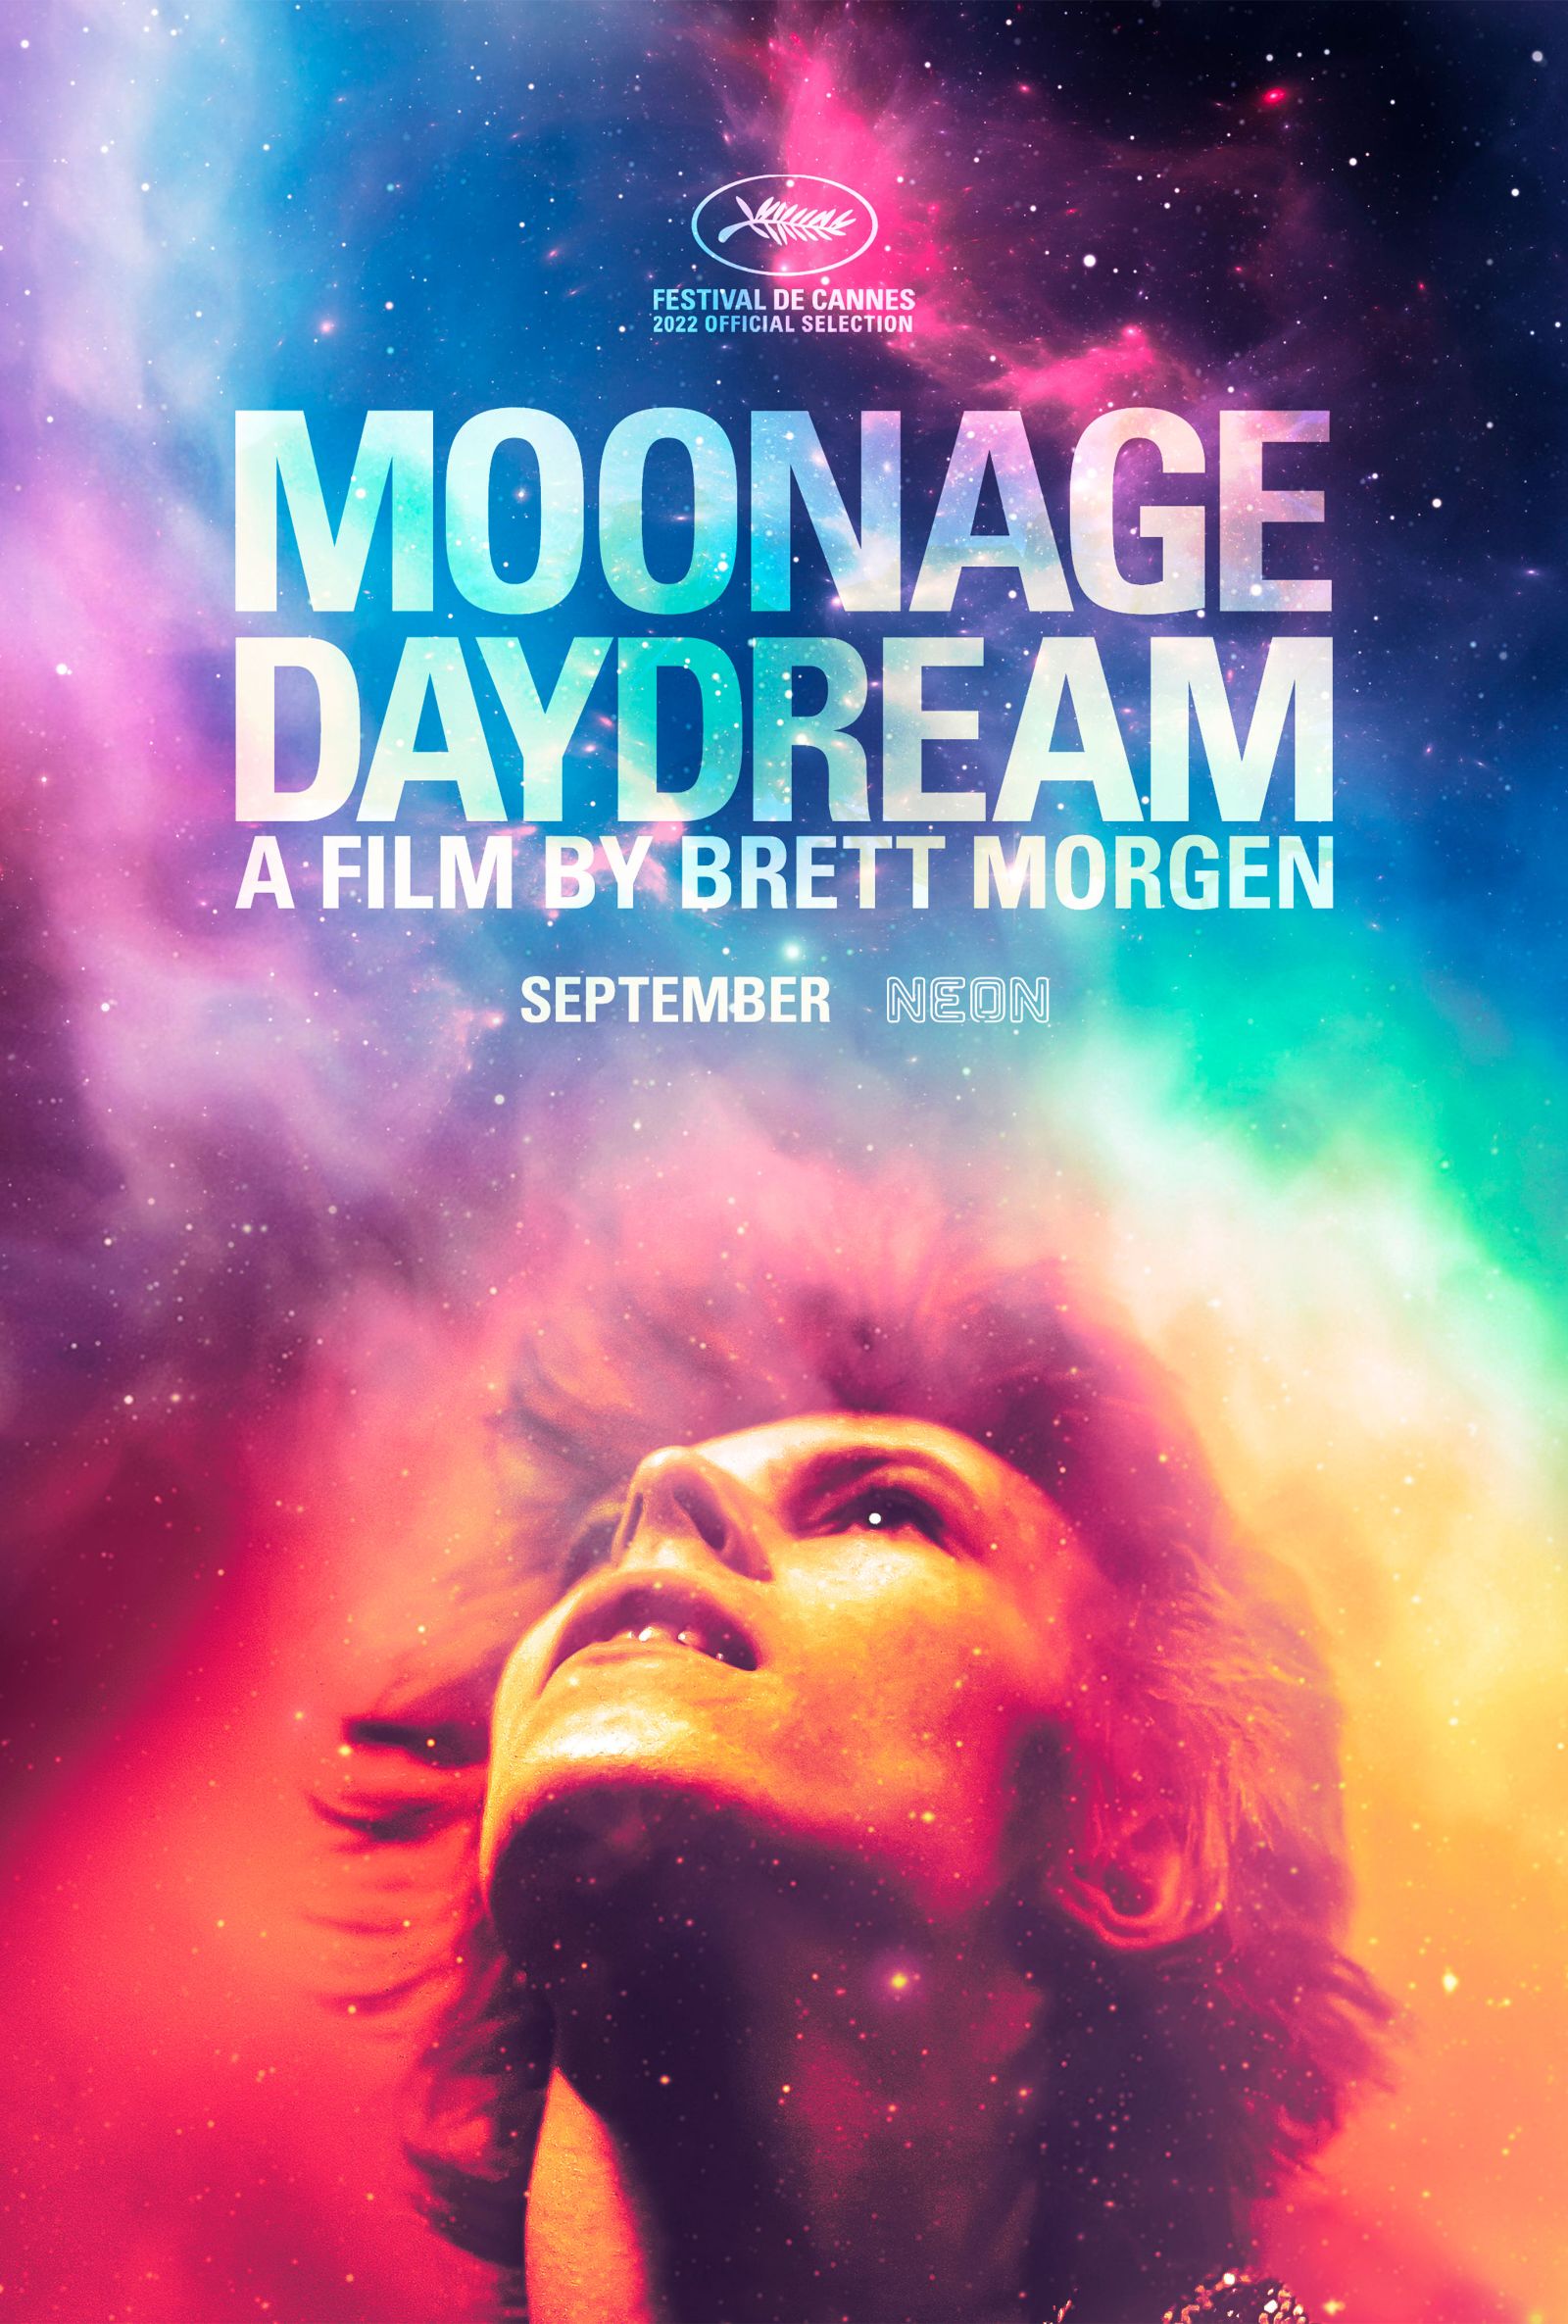 moonagedaydream teaserposter 1